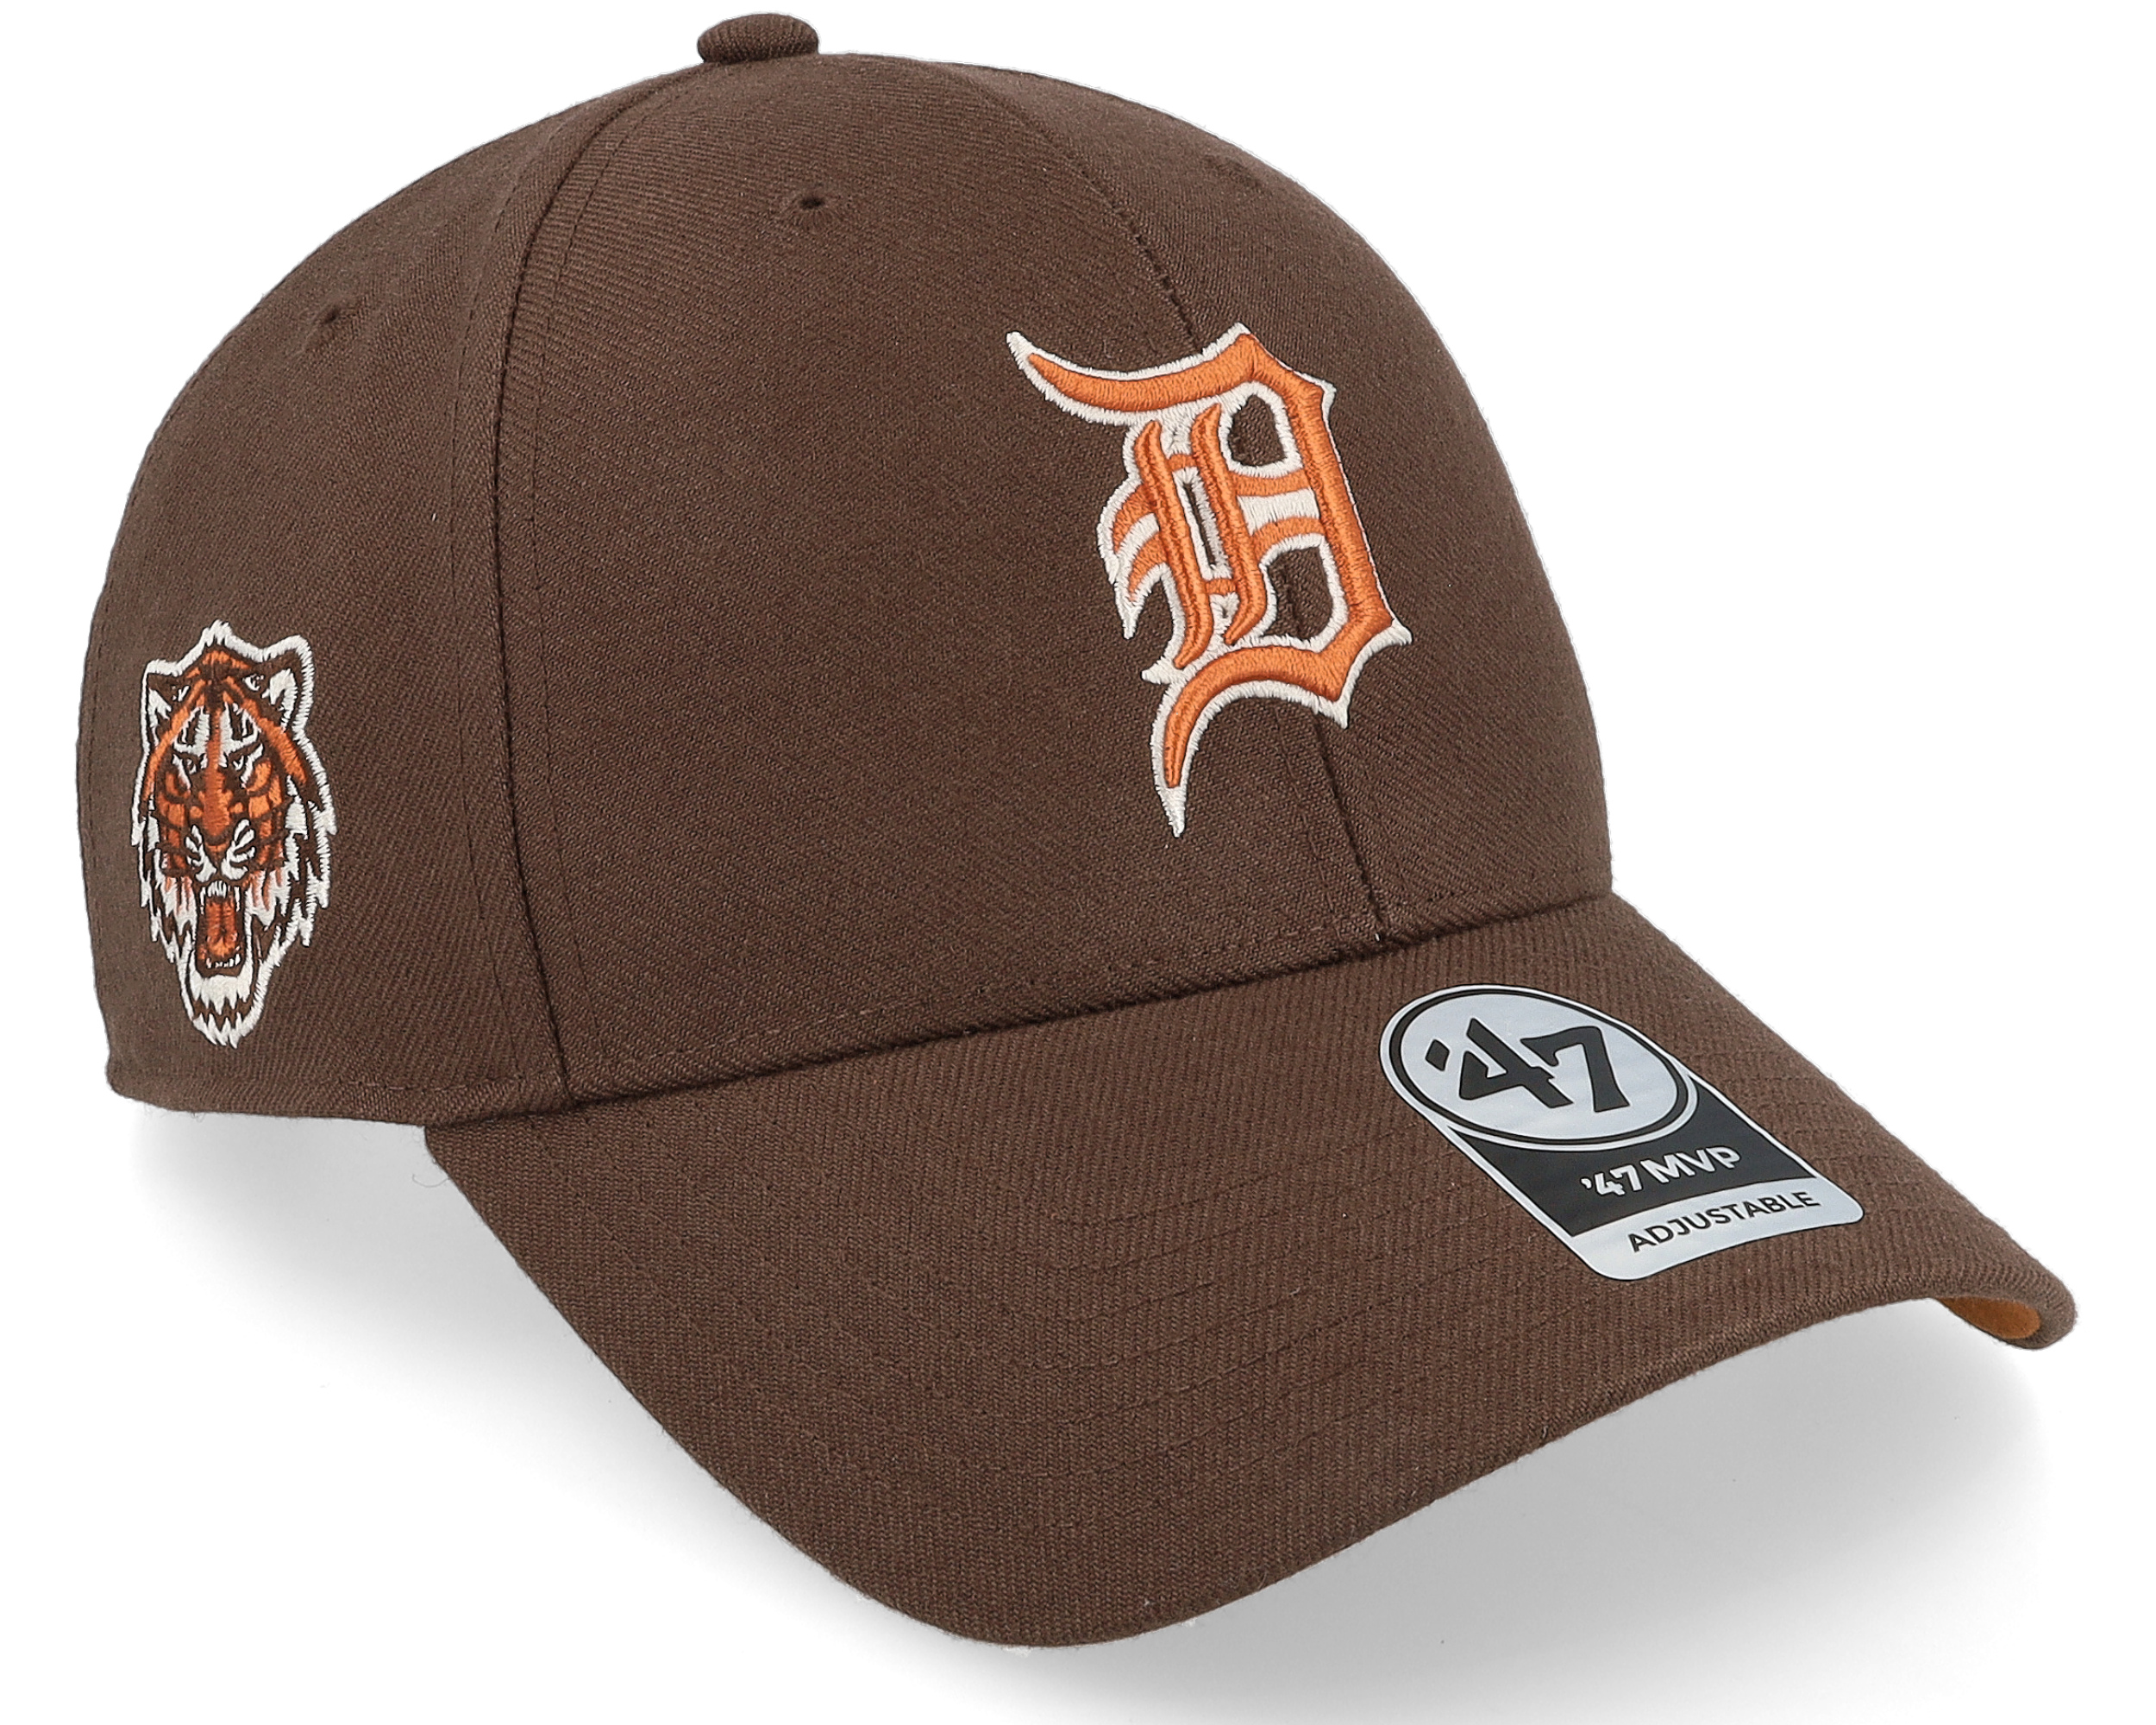 MLB Detroit Tigers MVP Cap by 47 Brand